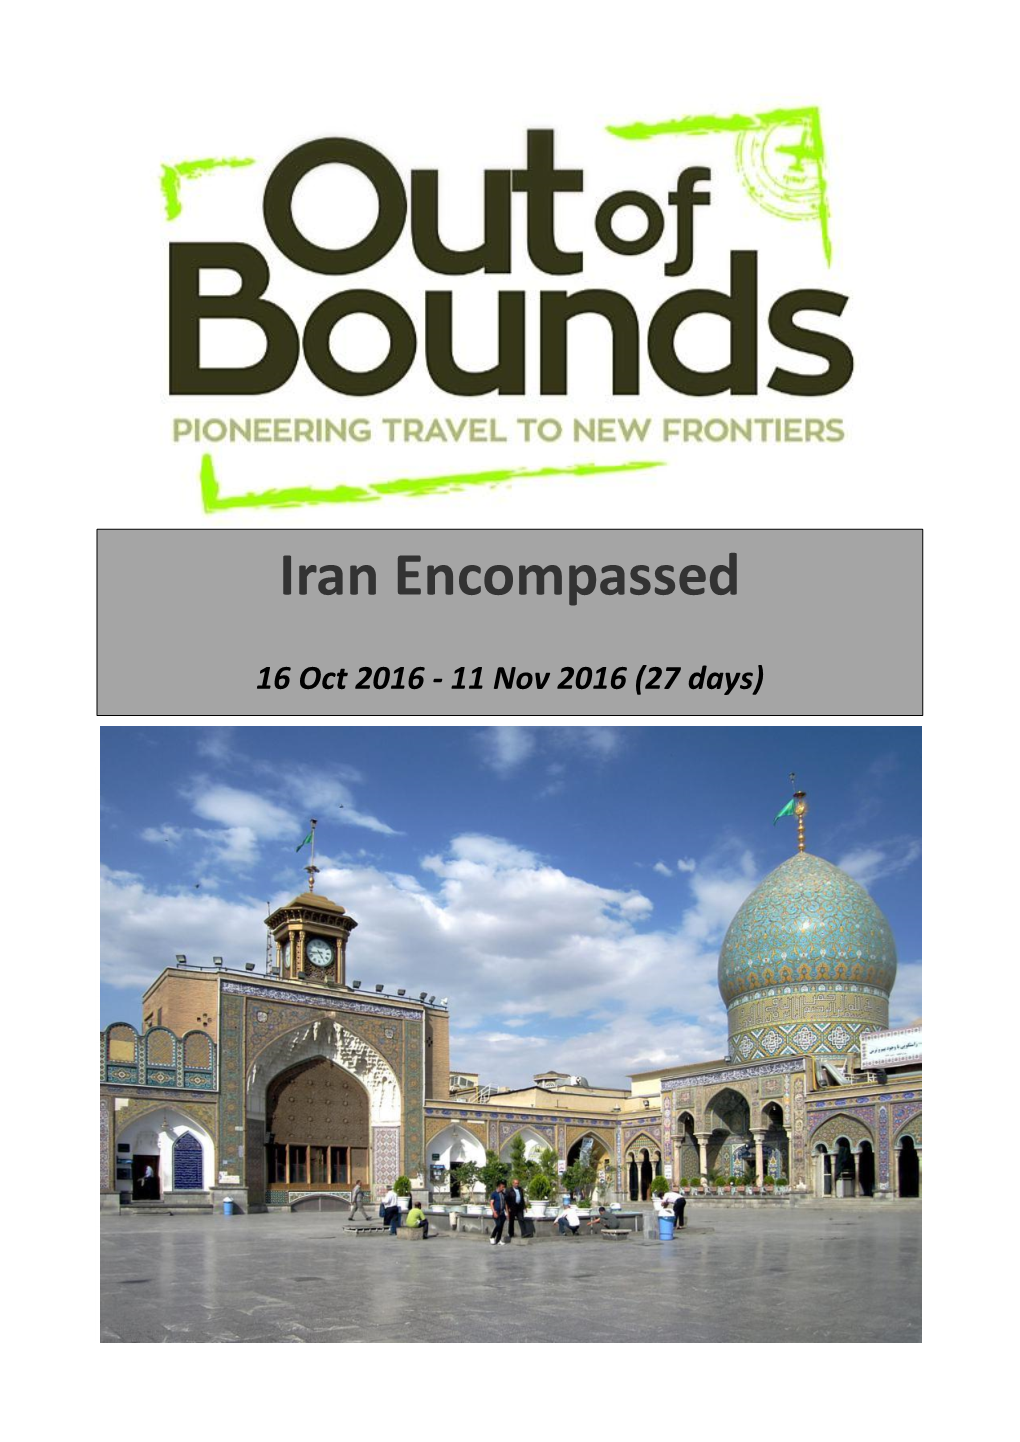 Iran Encompassed